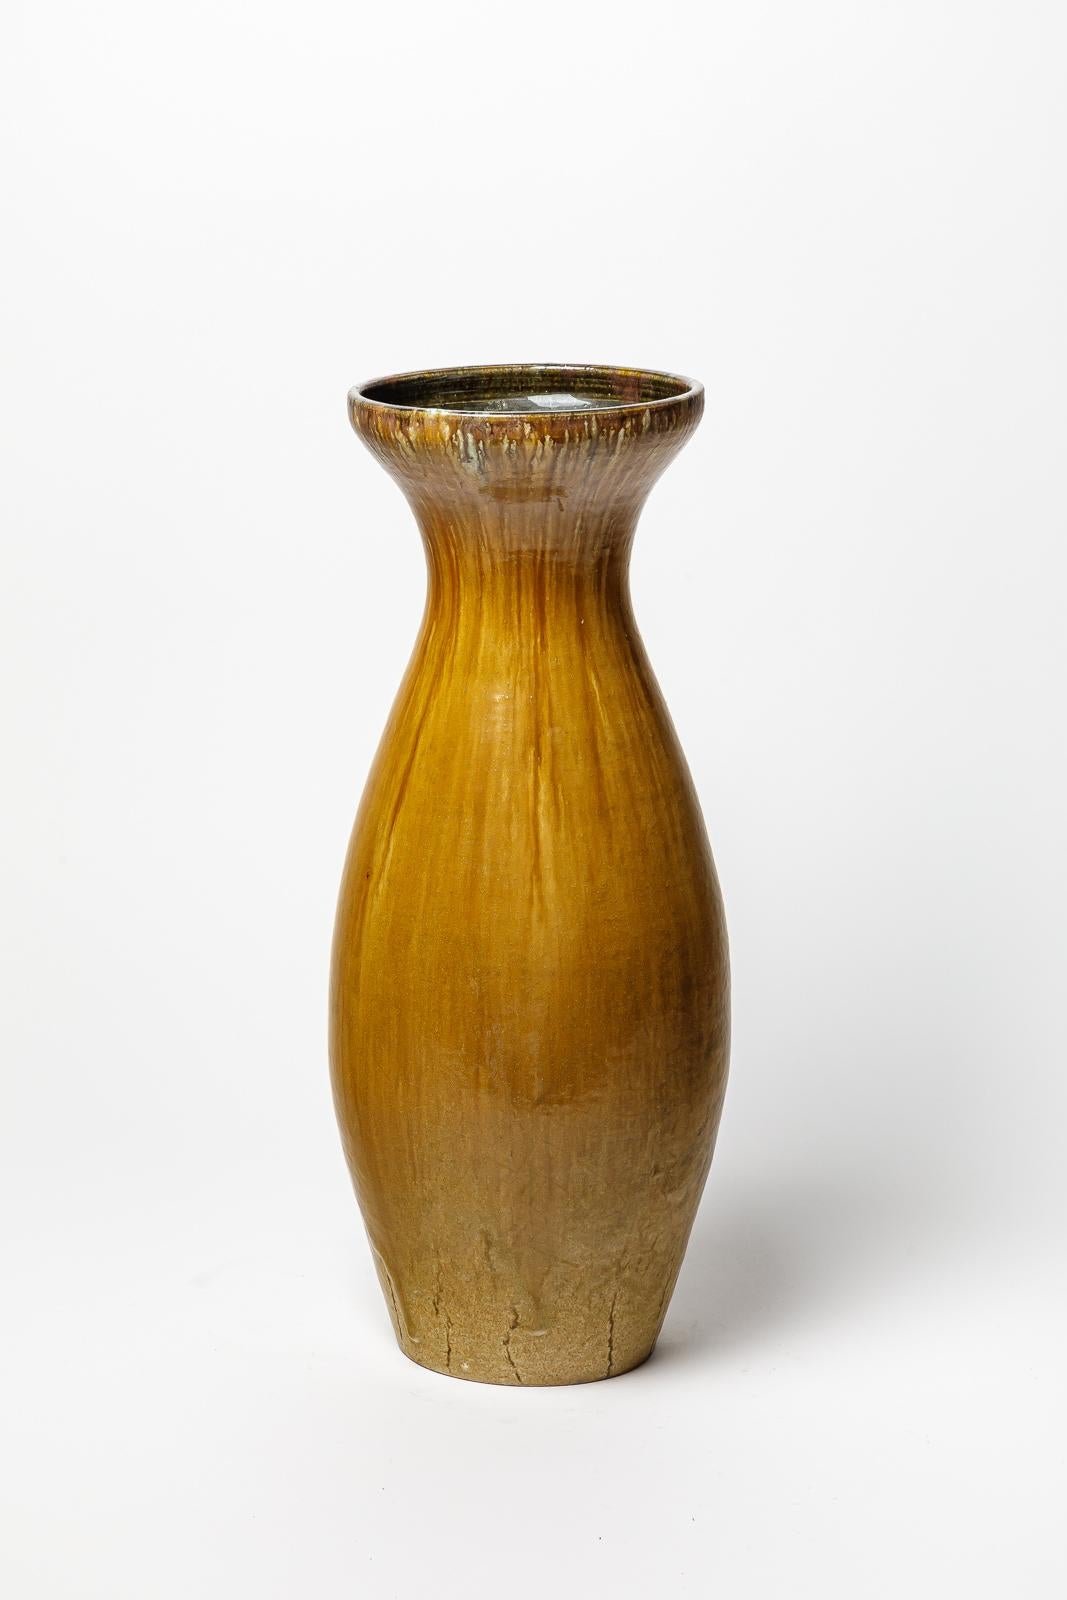 Ocher glazed stoneware vase by Accolay.
Artist signature under the base. Circa 1960-1970. 
H : 17.7’ x 6.3’ inches.